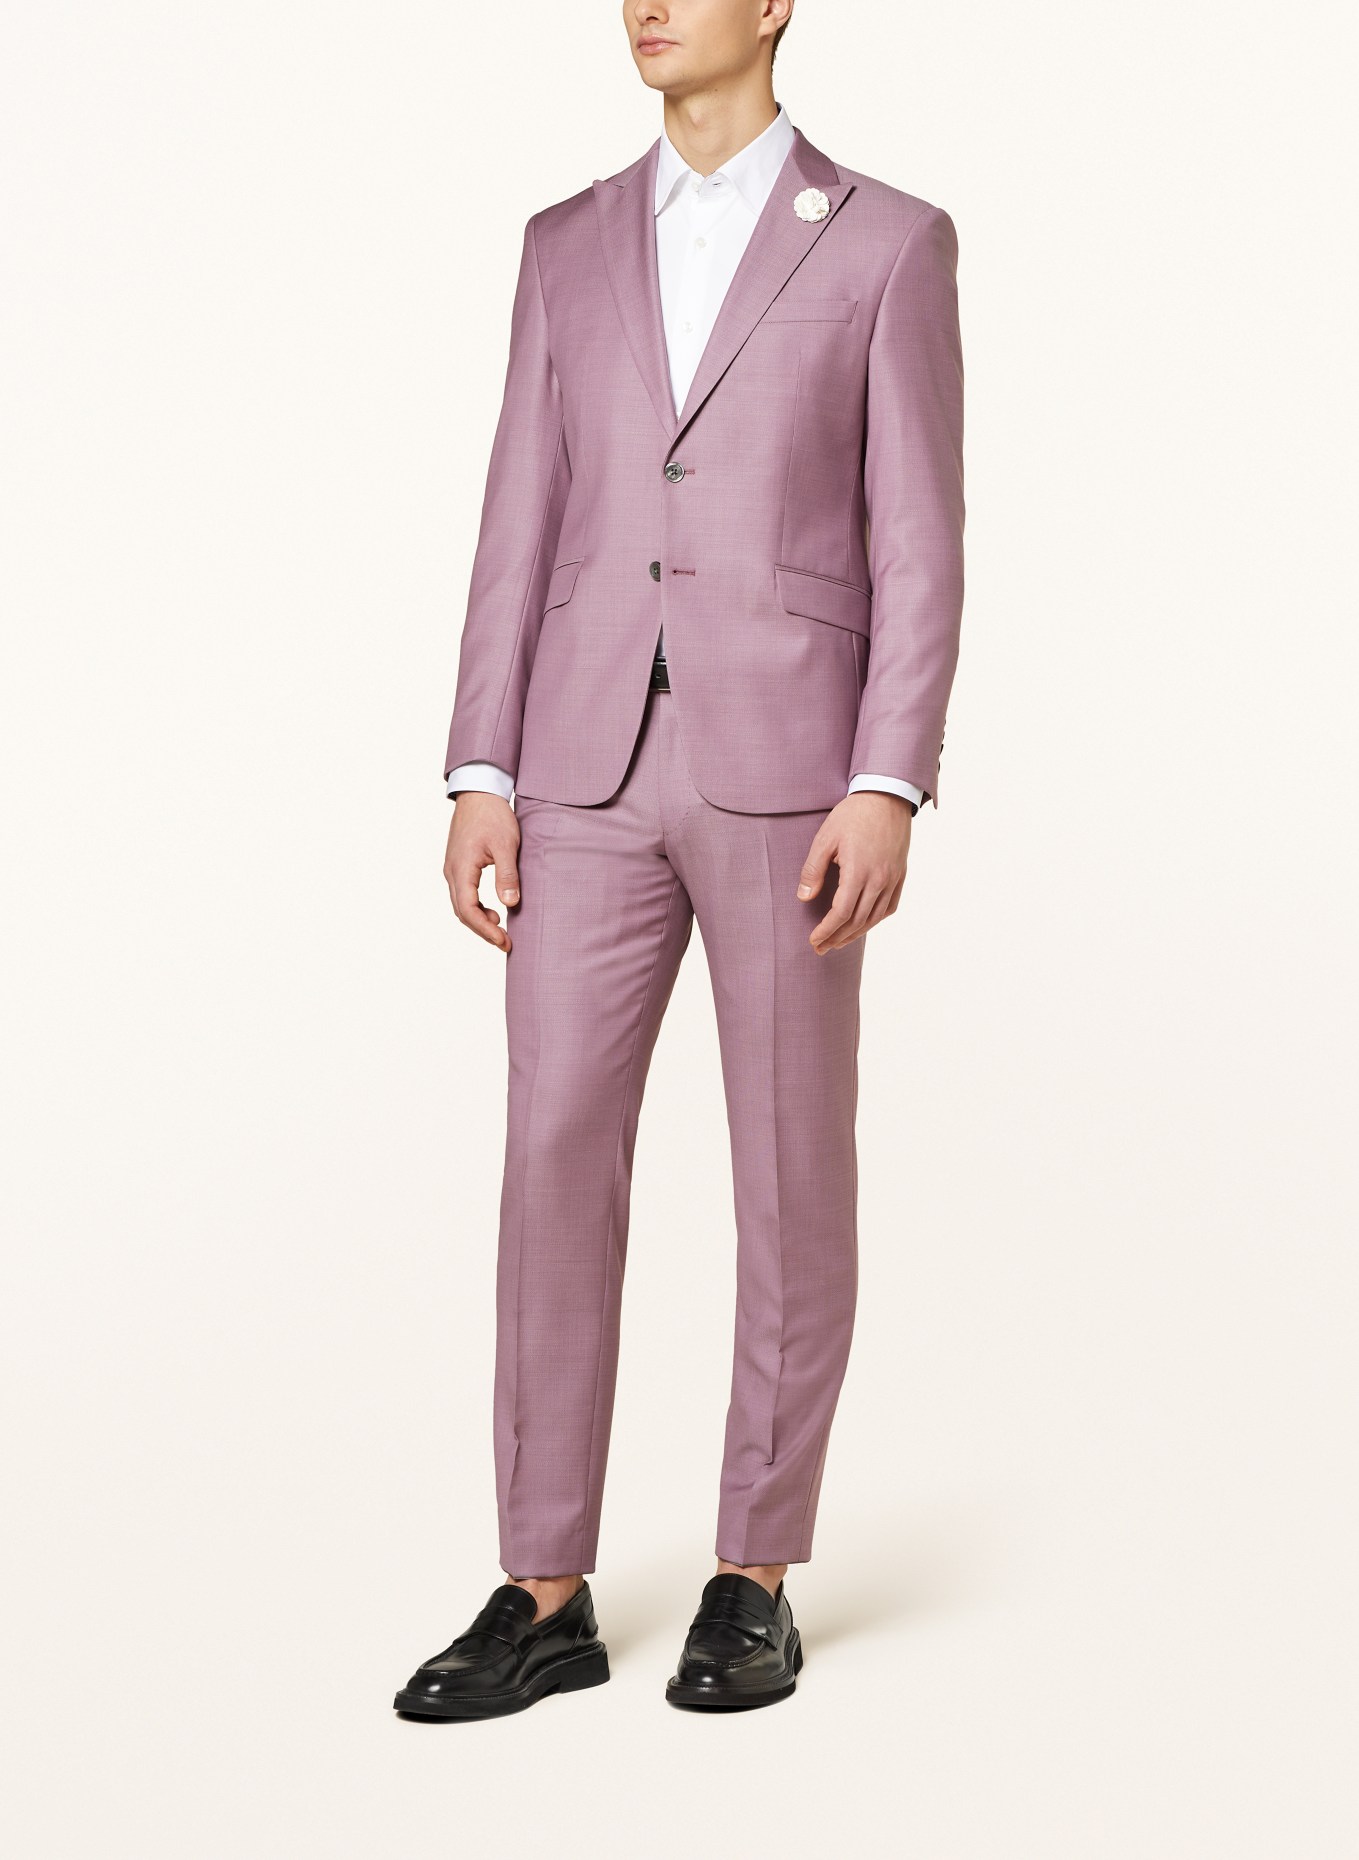 JOOP! Suit jacket HAWKER slim fit, Color: 650 Dark Pink                  650 (Image 2)